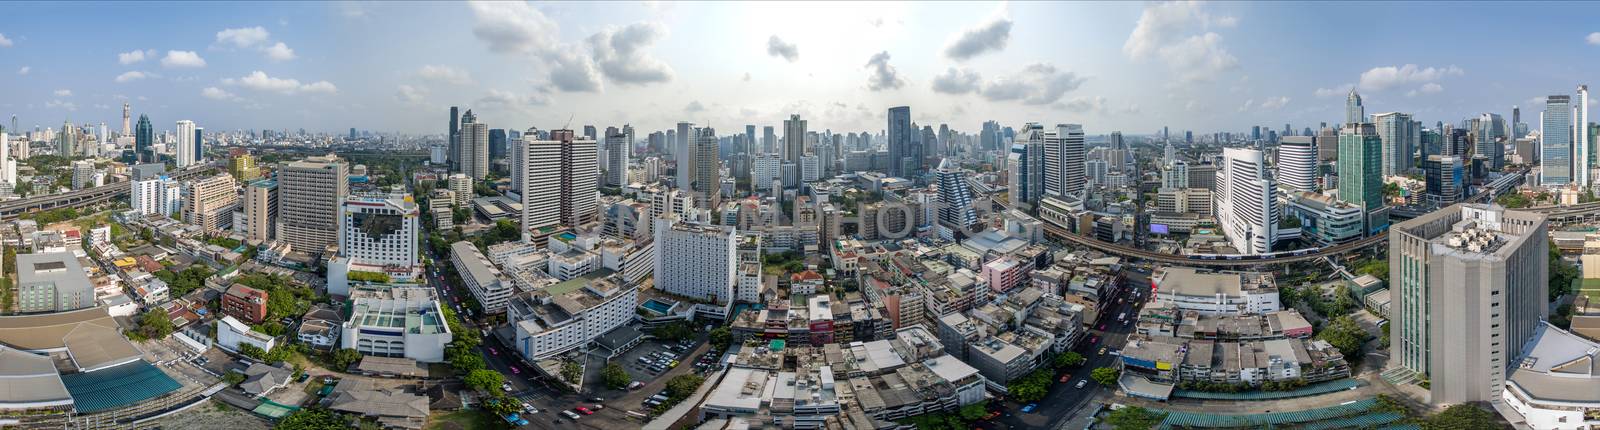 Bangkok City 360° panorama, Nana and Sukhumvit Road by praethip